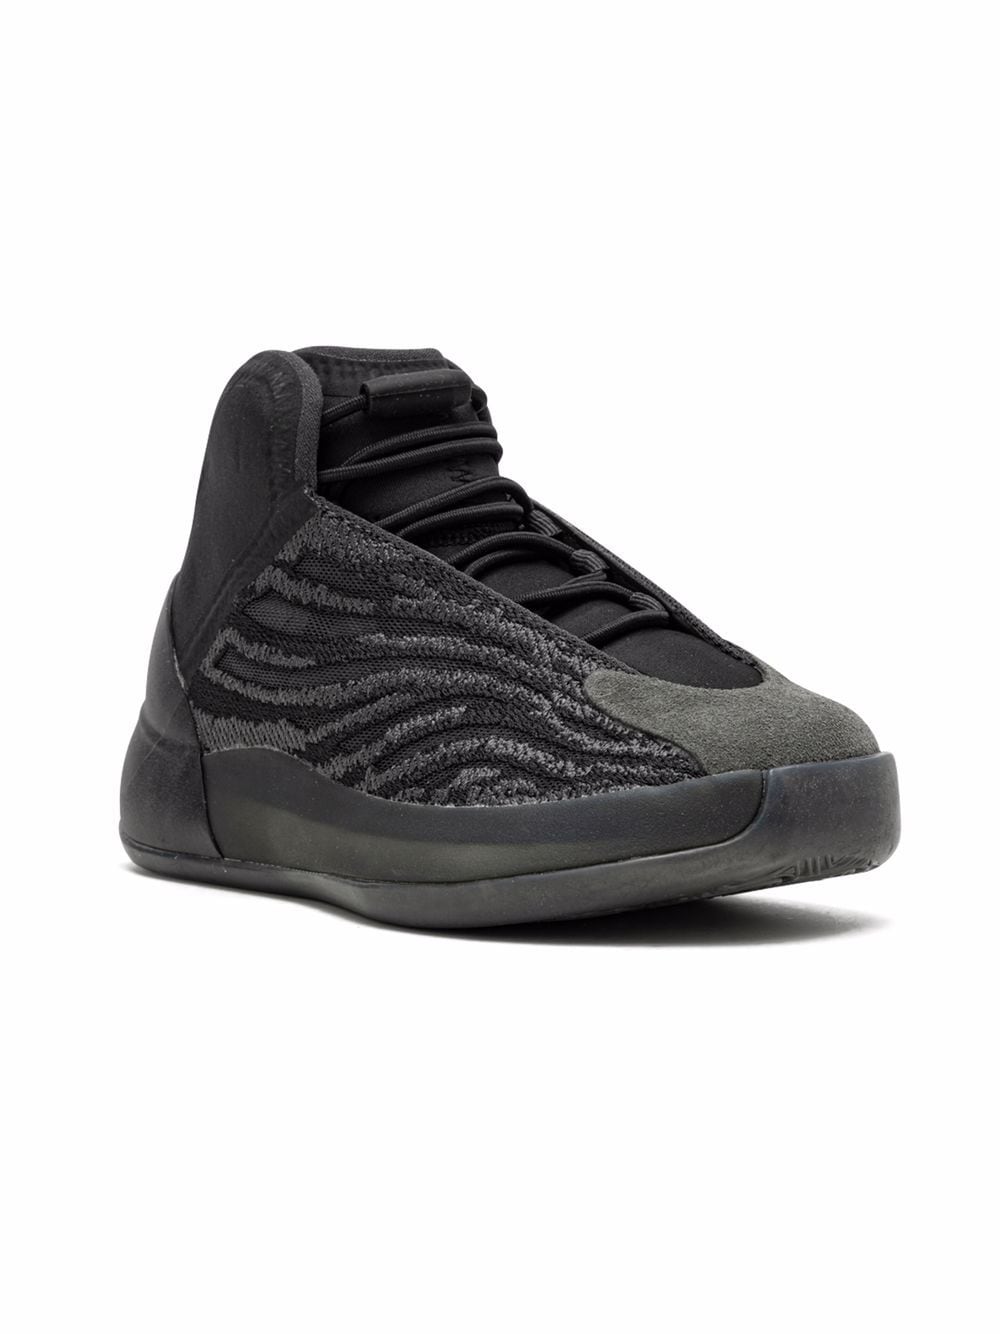 Adidas Yeezy Kids Yeezy Quantum "Onyx" sneakers - Black von Adidas Yeezy Kids